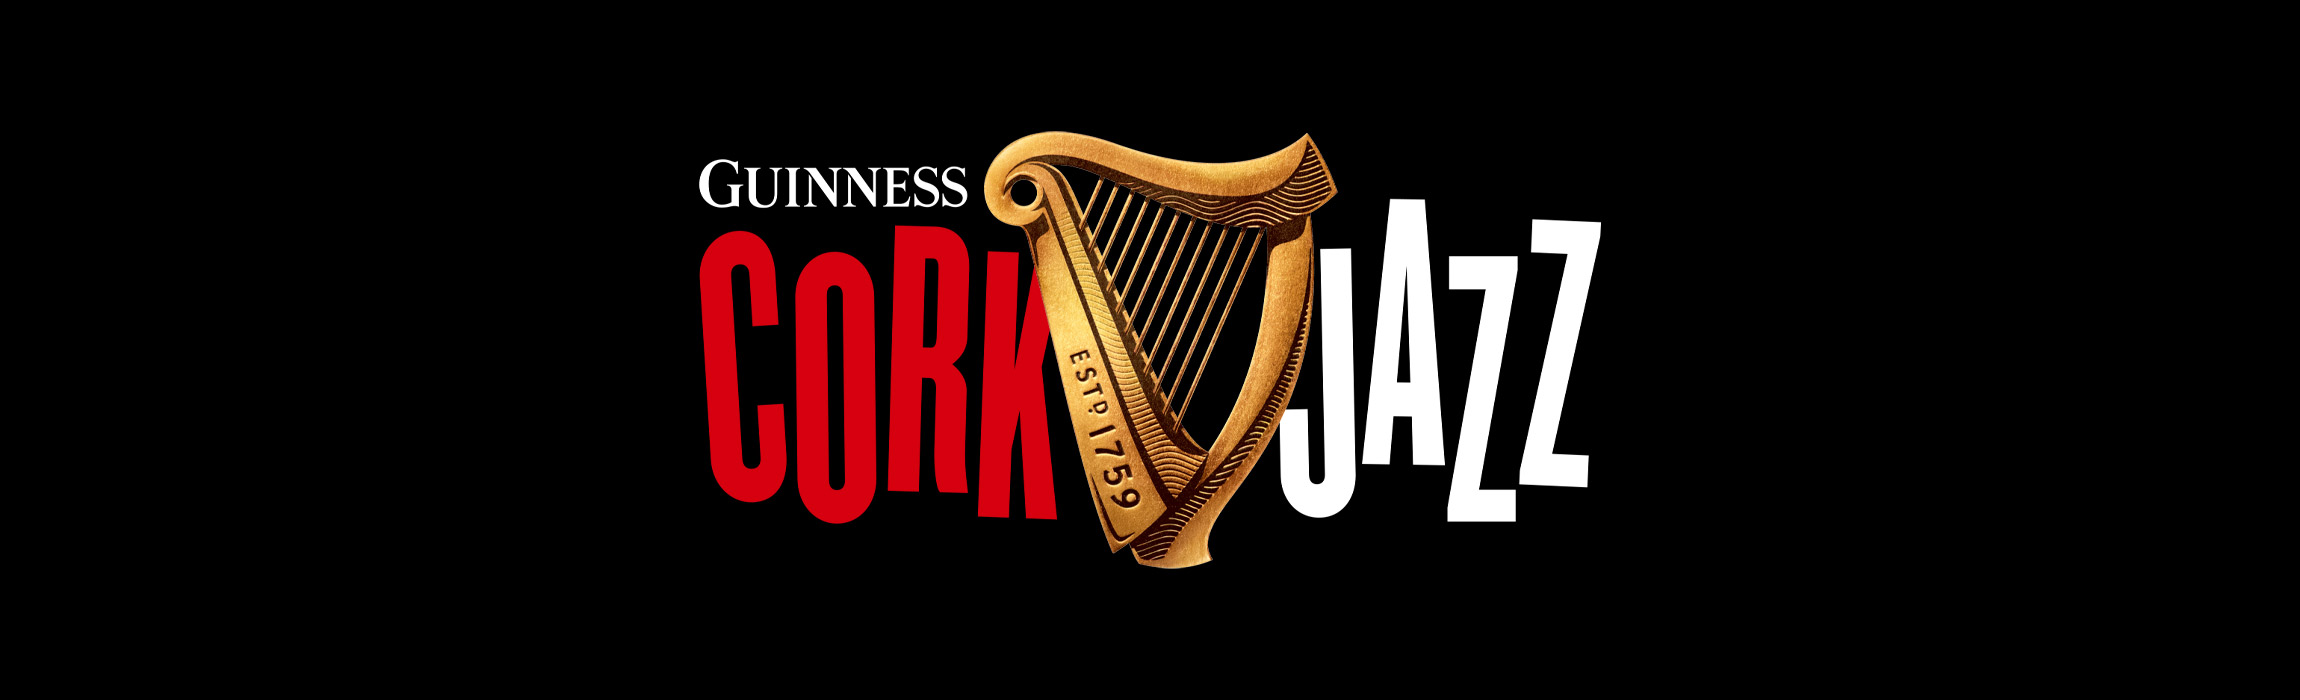 Guinness Cork Jazz Festival | Triskel Arts Centre